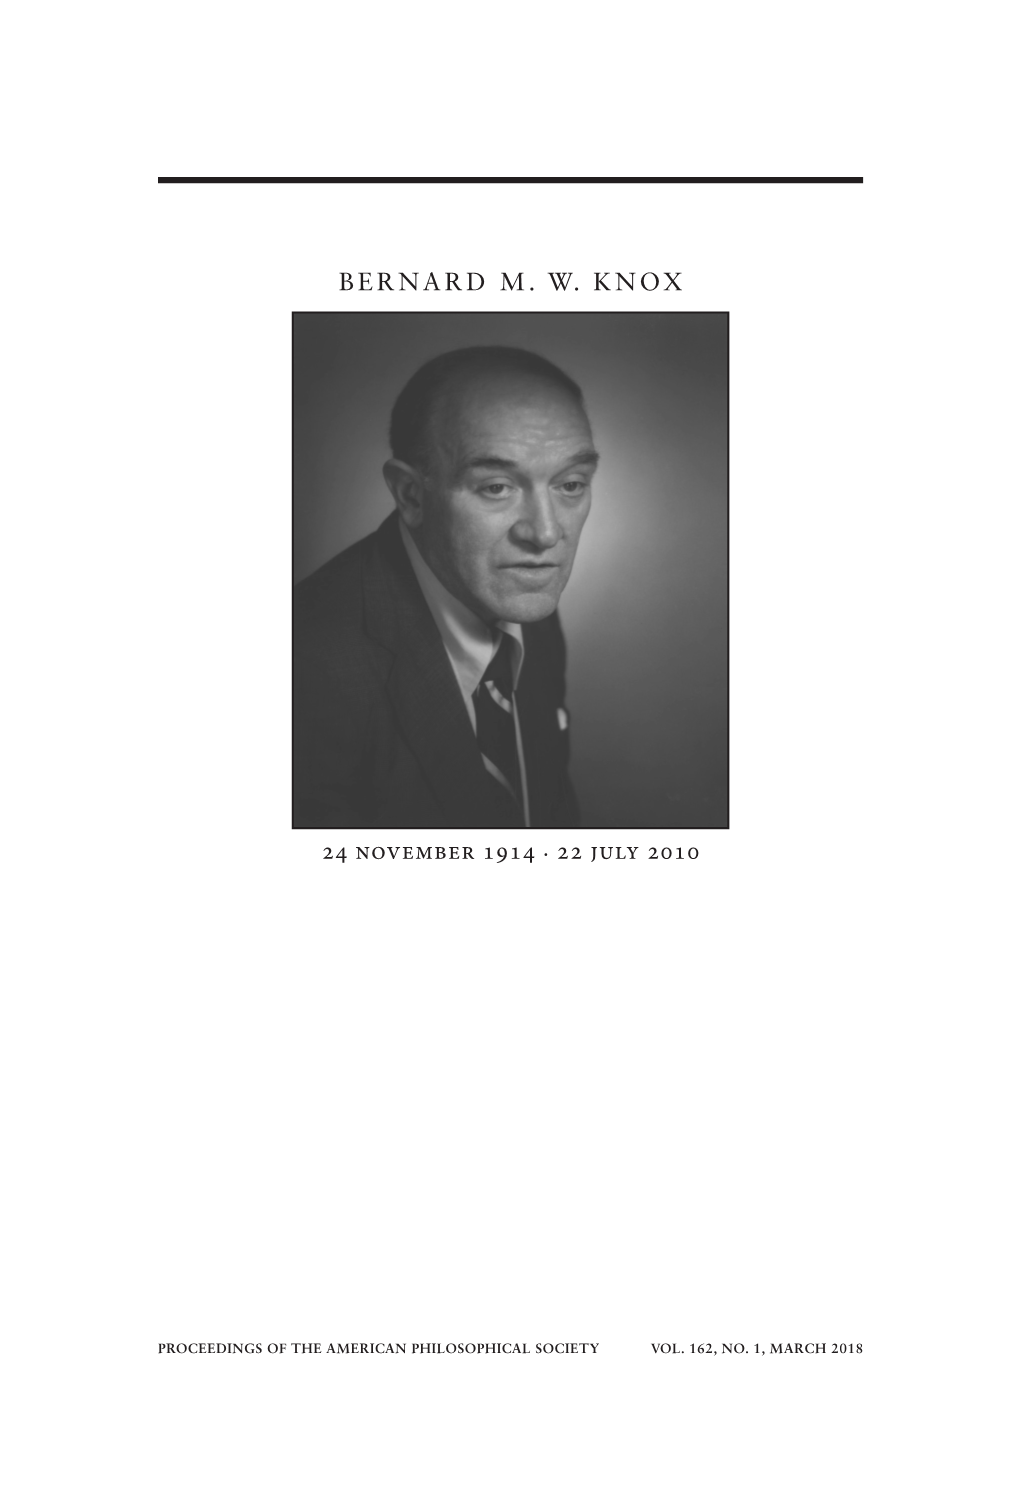 Bernard M. W. Knox